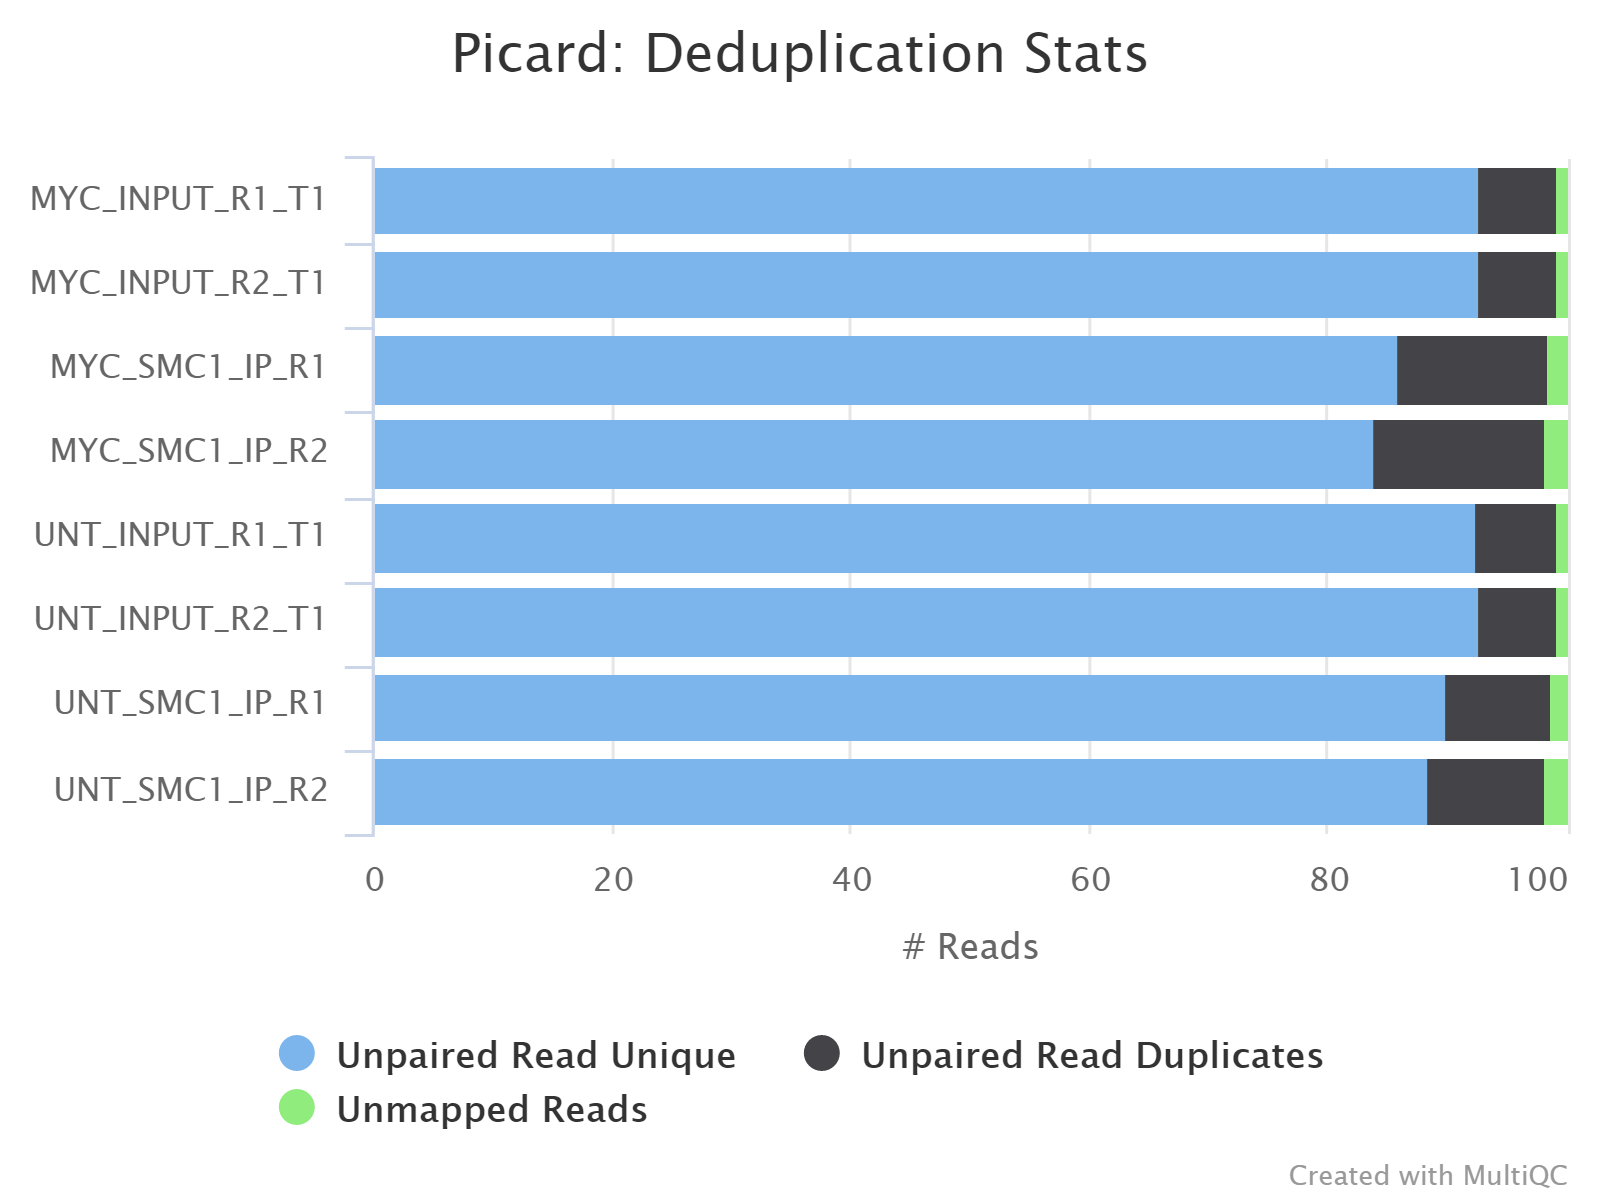 MultiQC - Picard deduplication stats plot